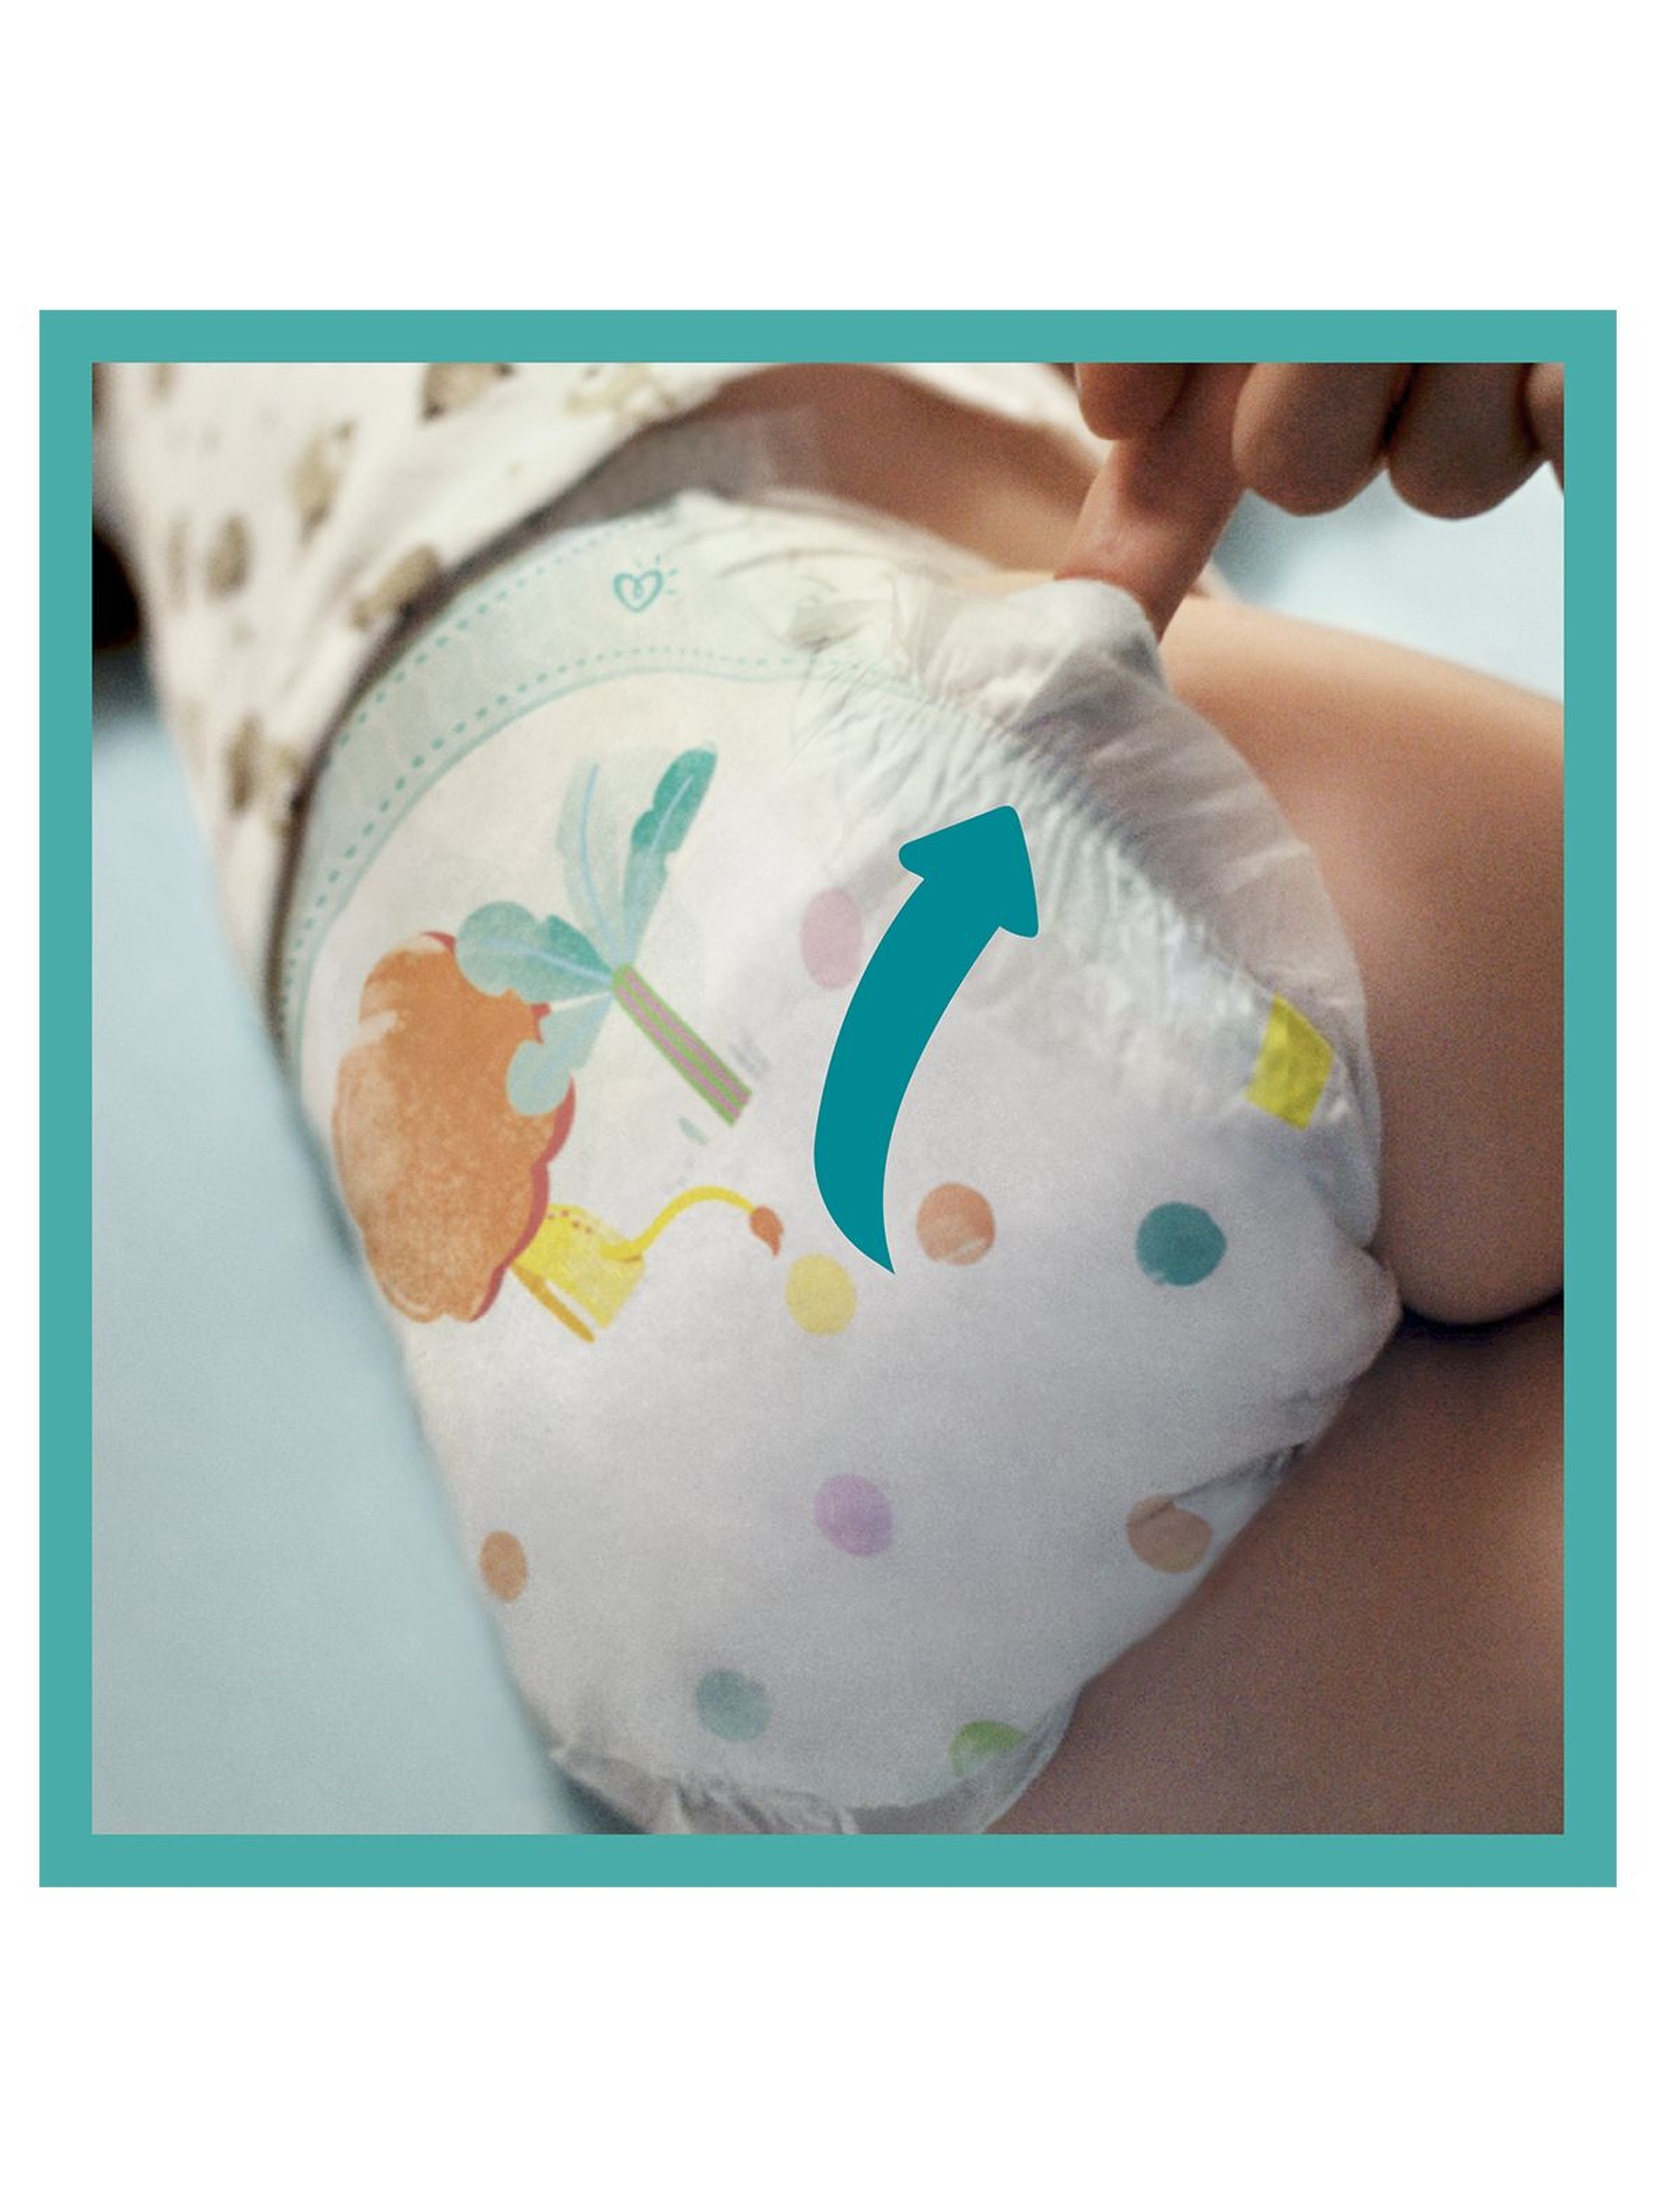 Pieluchy Pampers Active Baby, rozmiar 4+, 54 pieluszek, 10-15kg